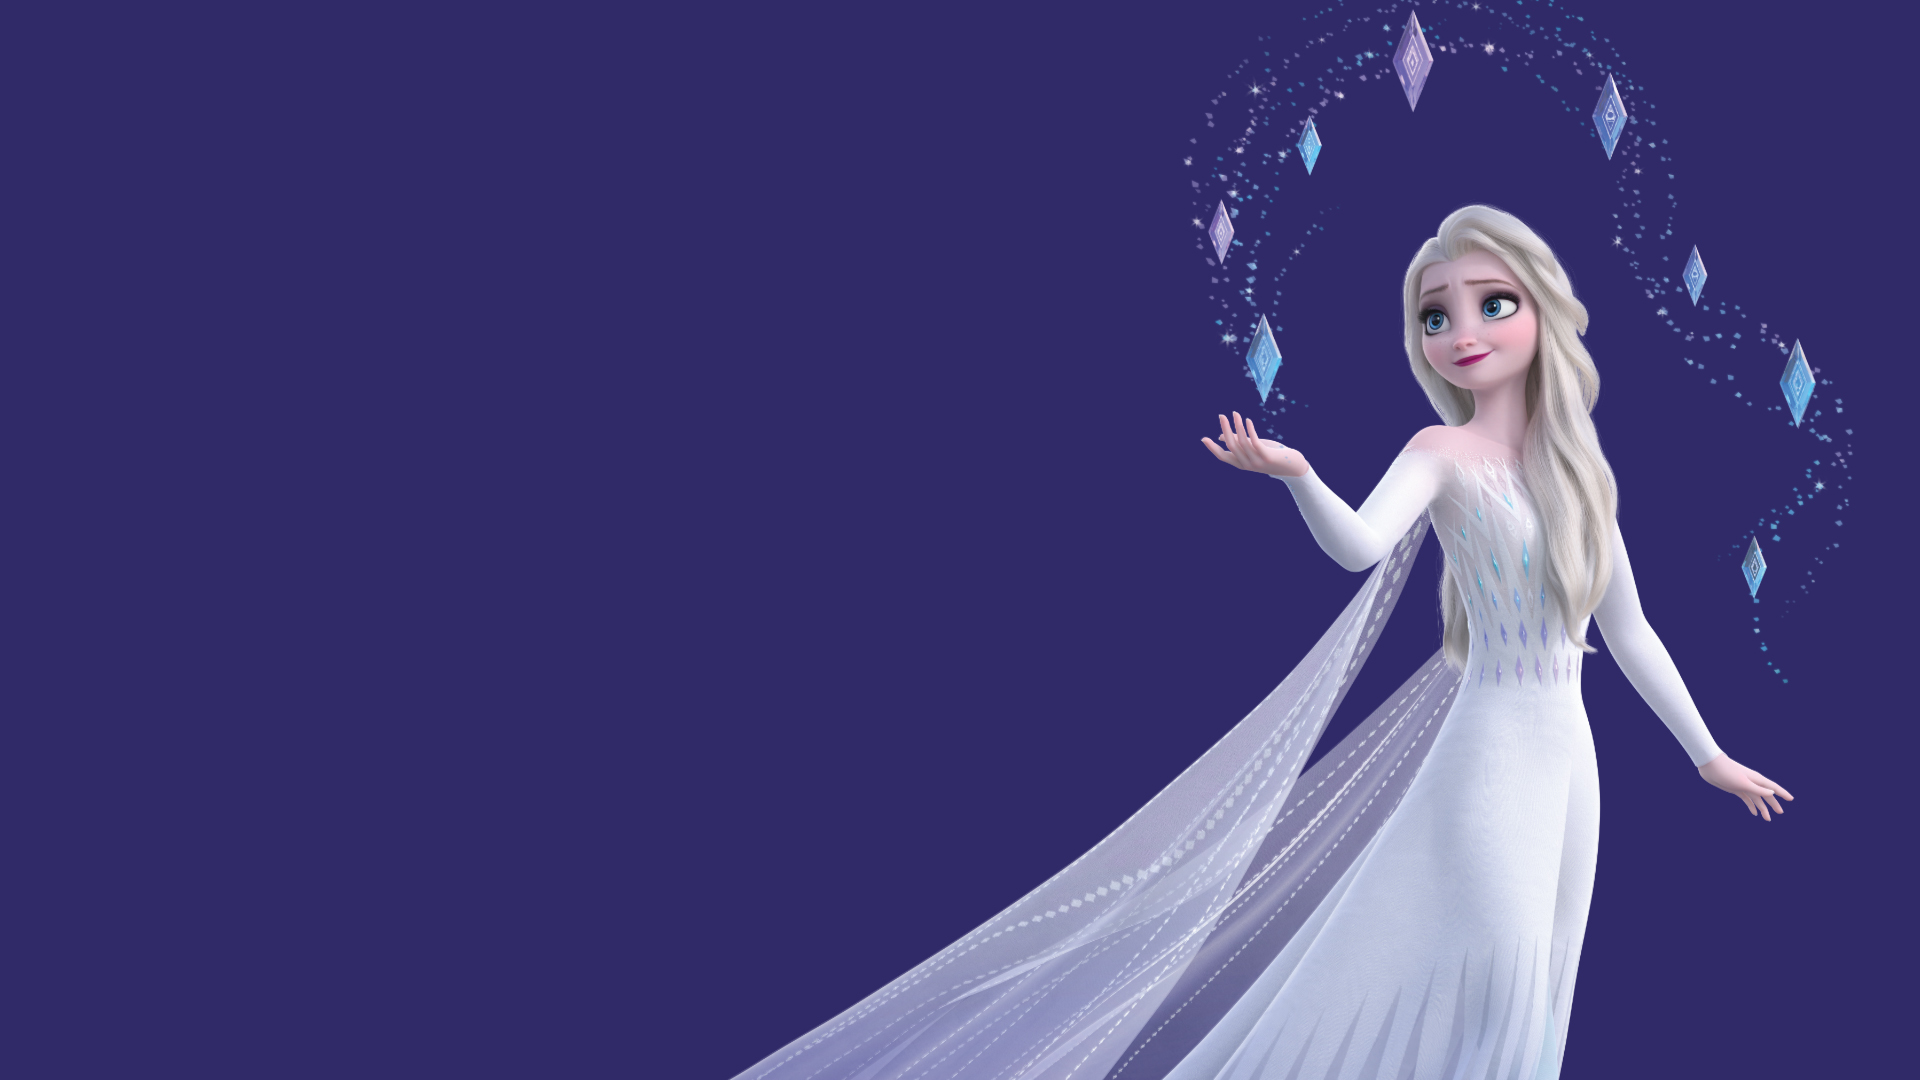 Free download Frozen Disney Frozen Desktop and mobile wallpaper Wallippo  [1920x1080] for your Desktop, Mobile & Tablet | Explore 44+ Disney Frozen  Wallpaper for Desktop | Disney Frozen Wallpaper, Disney Frozen Elsa